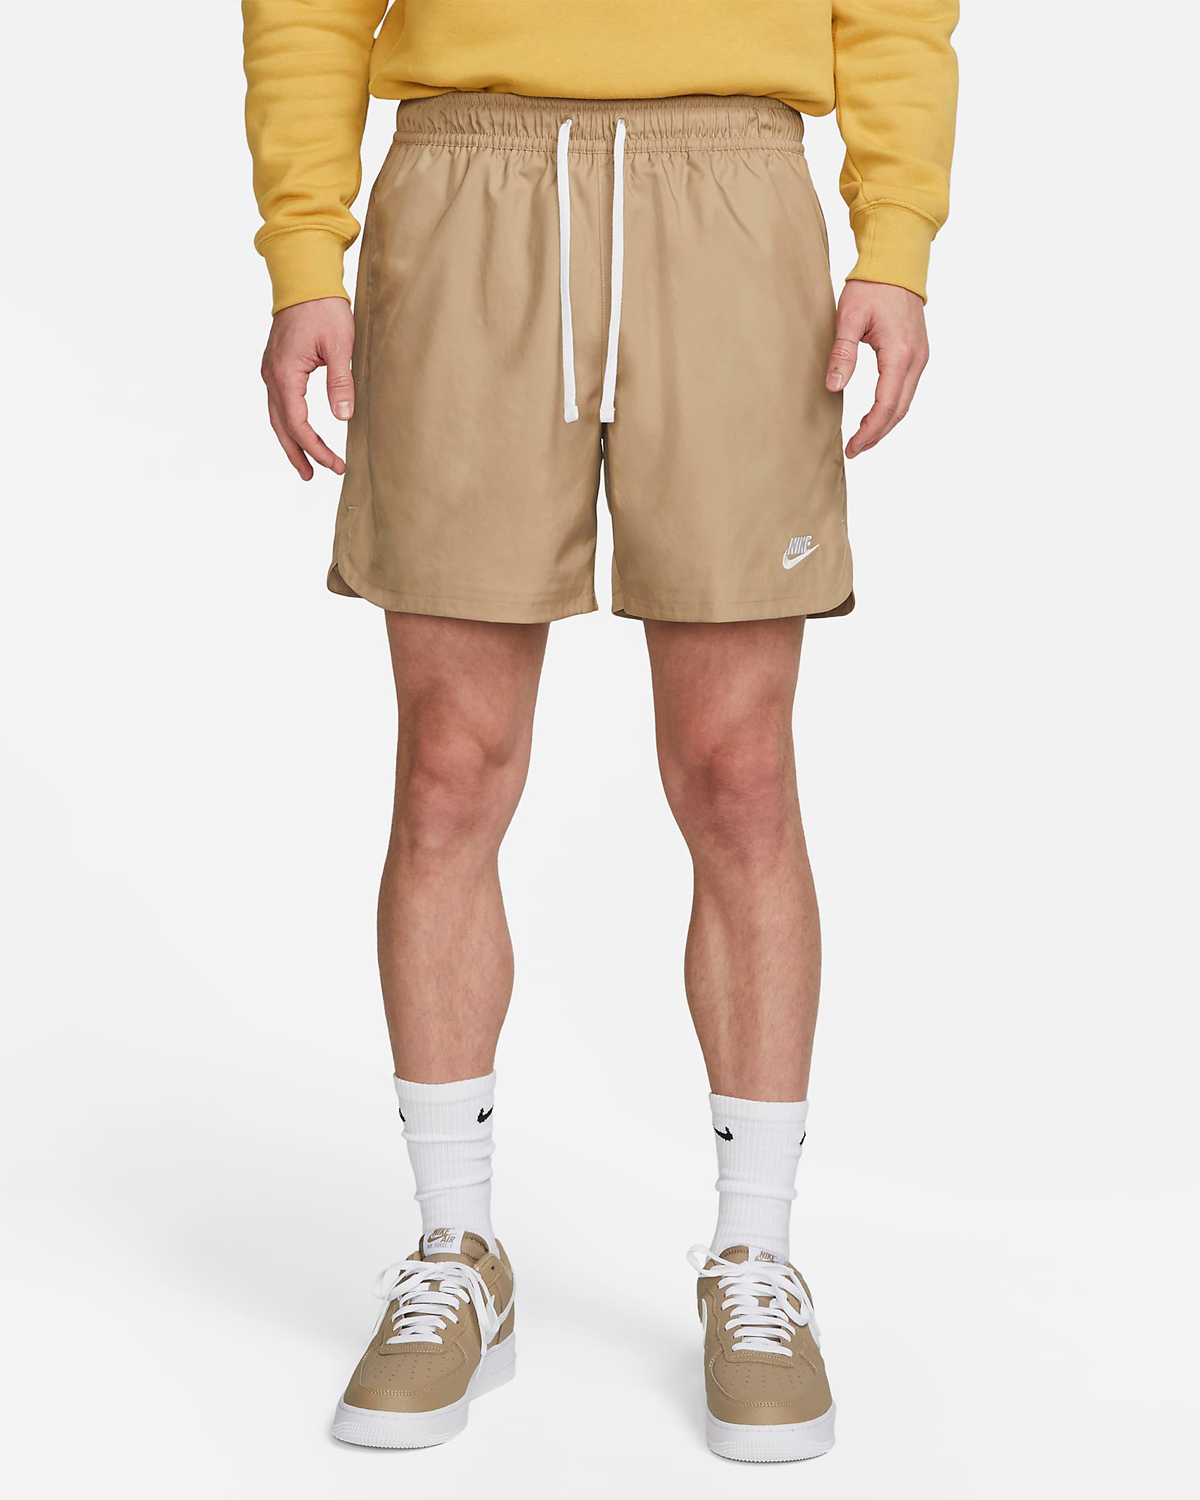 Nike-Sportswear-Woven-Flow-Shorts-Khaki